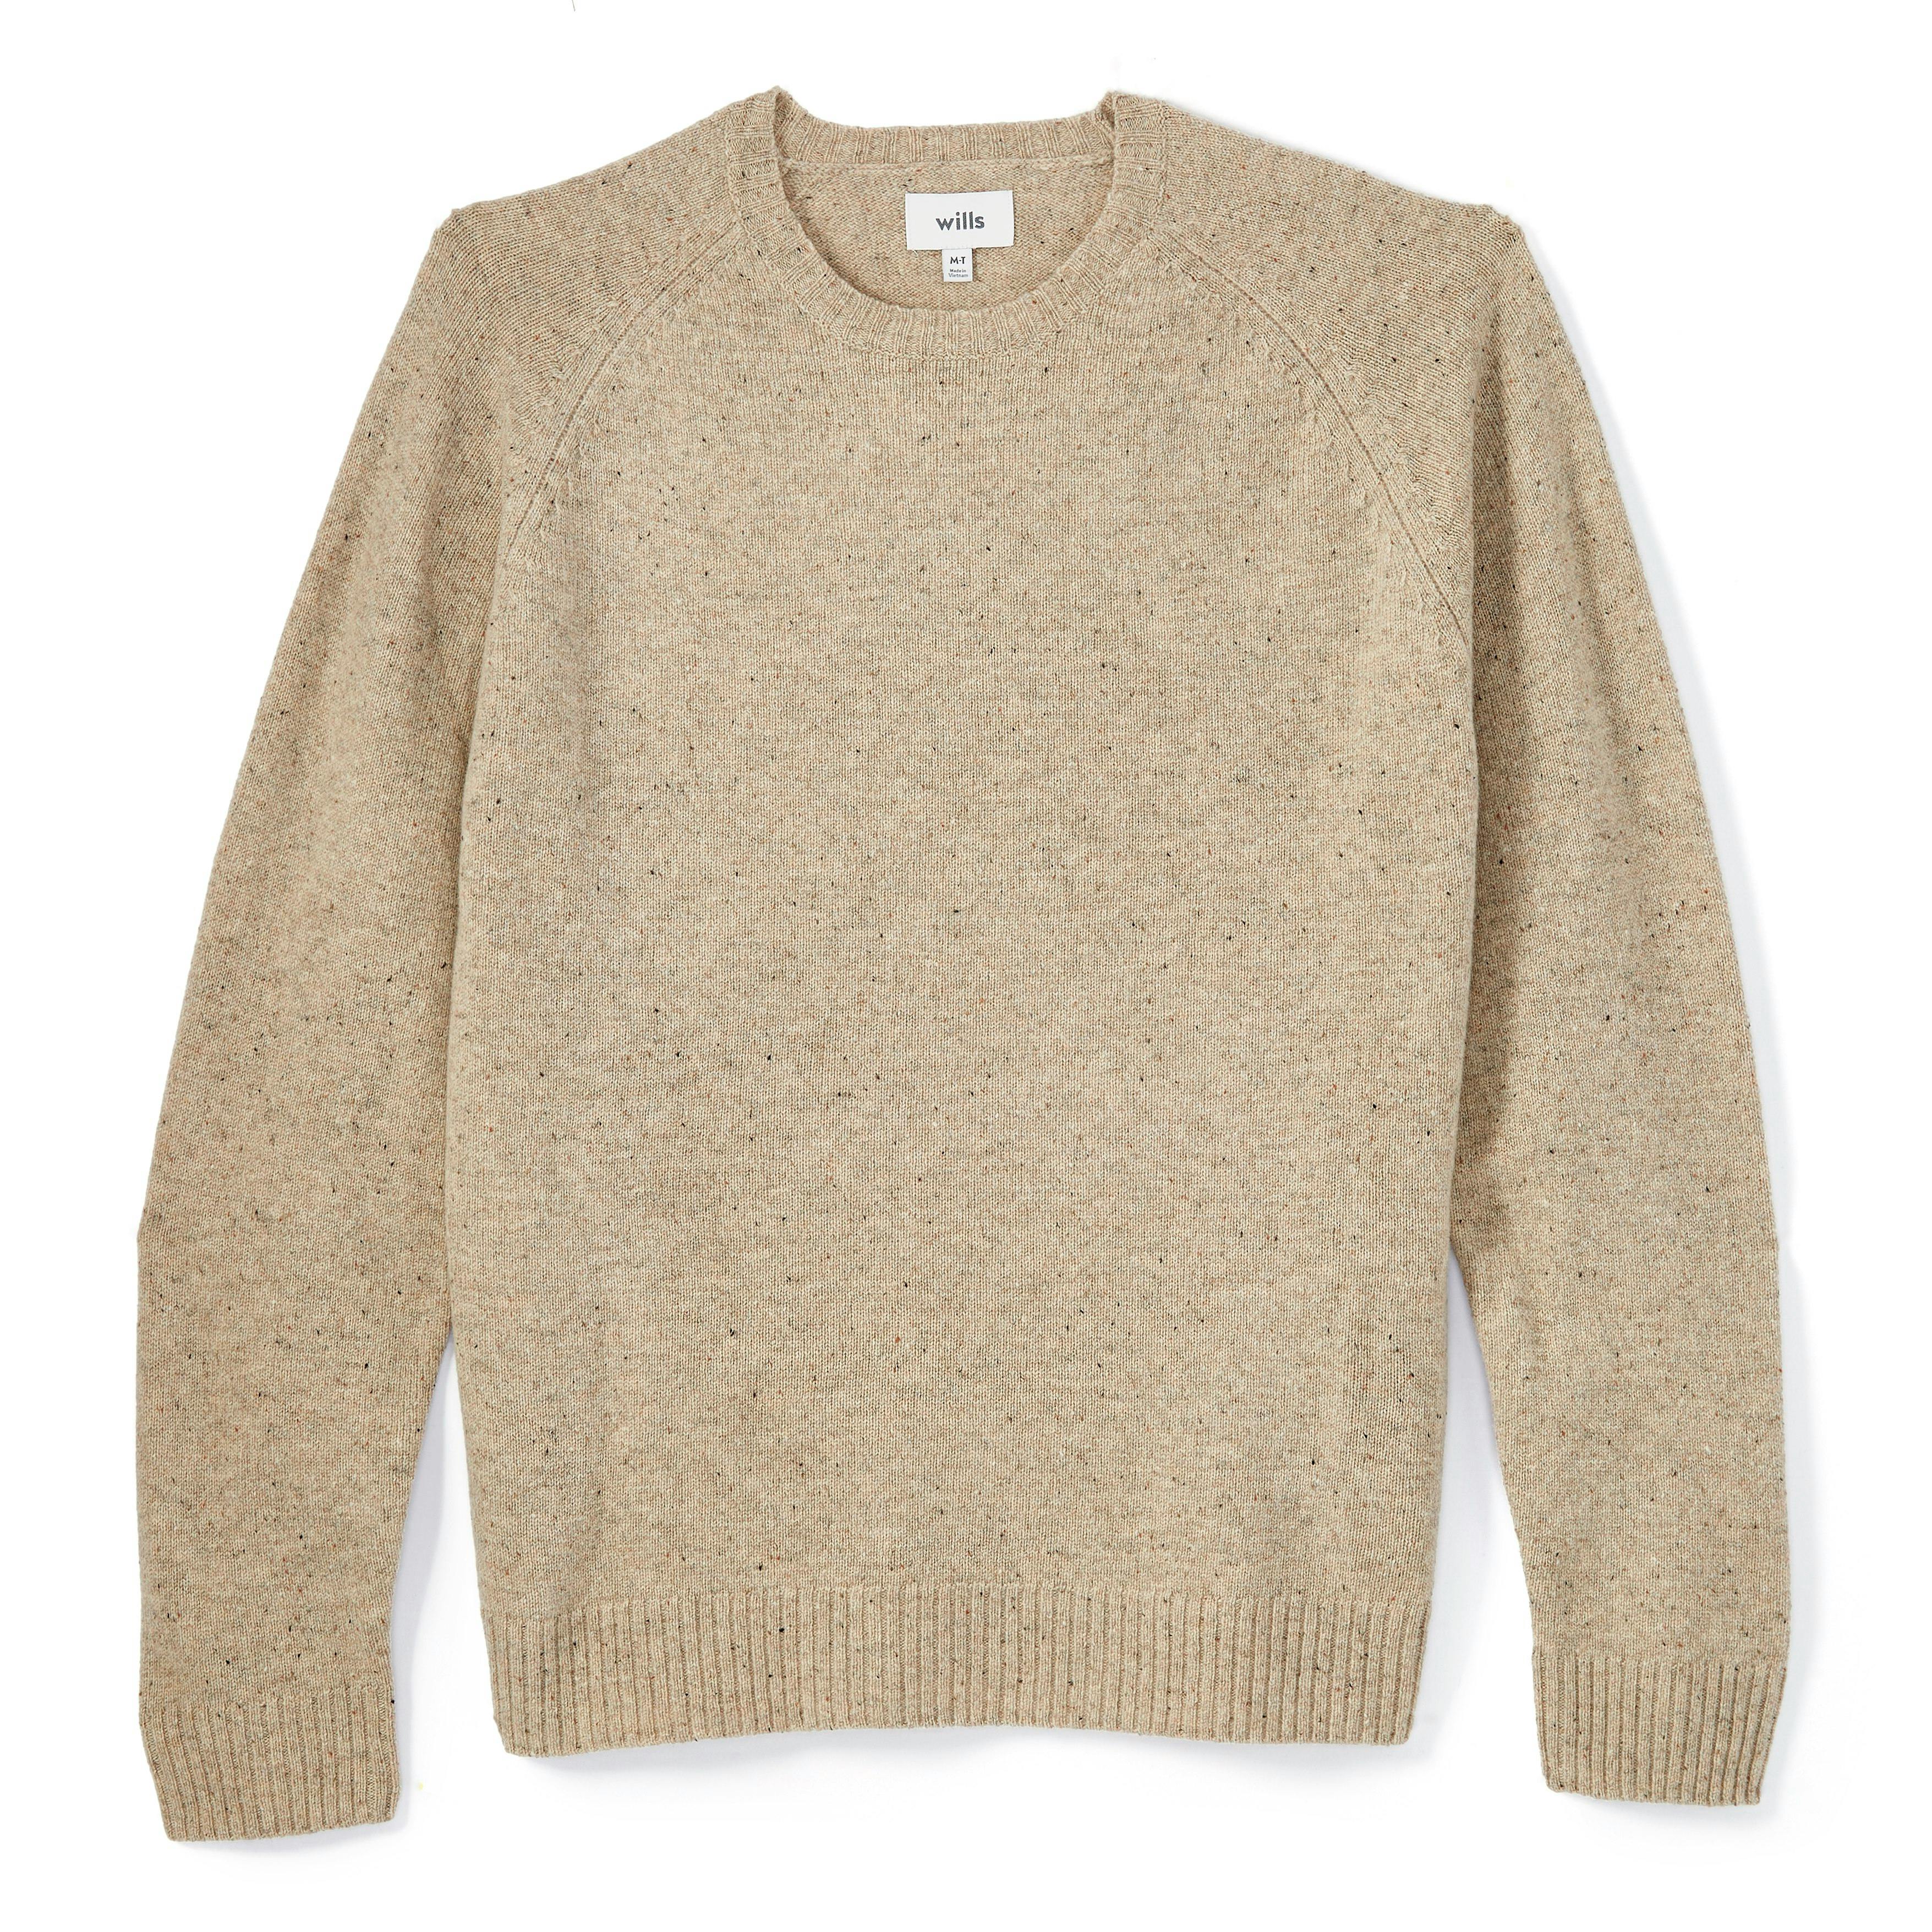 Speckled Merino Wool Crewneck Sweater - Tall